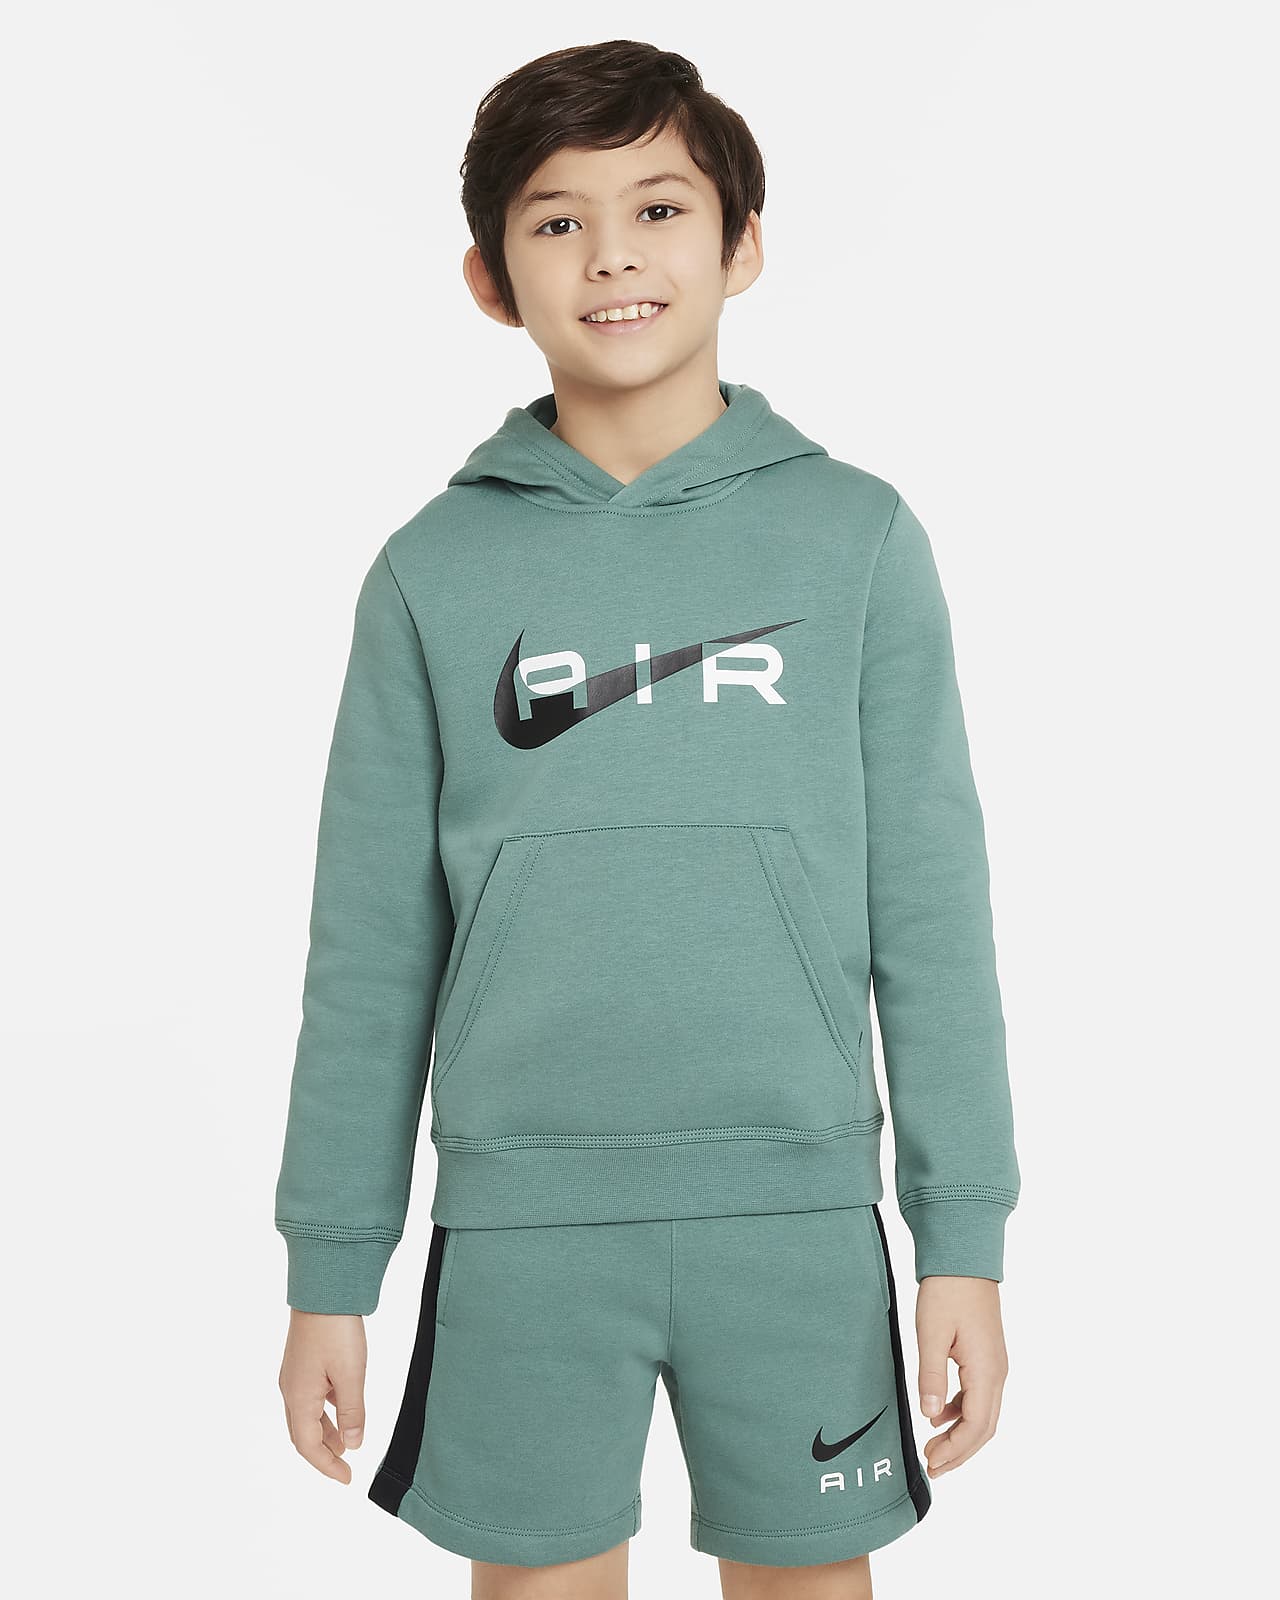 Nike Air Fleece Genç Çocuk Kapüşonlu Sweatshirt'ü